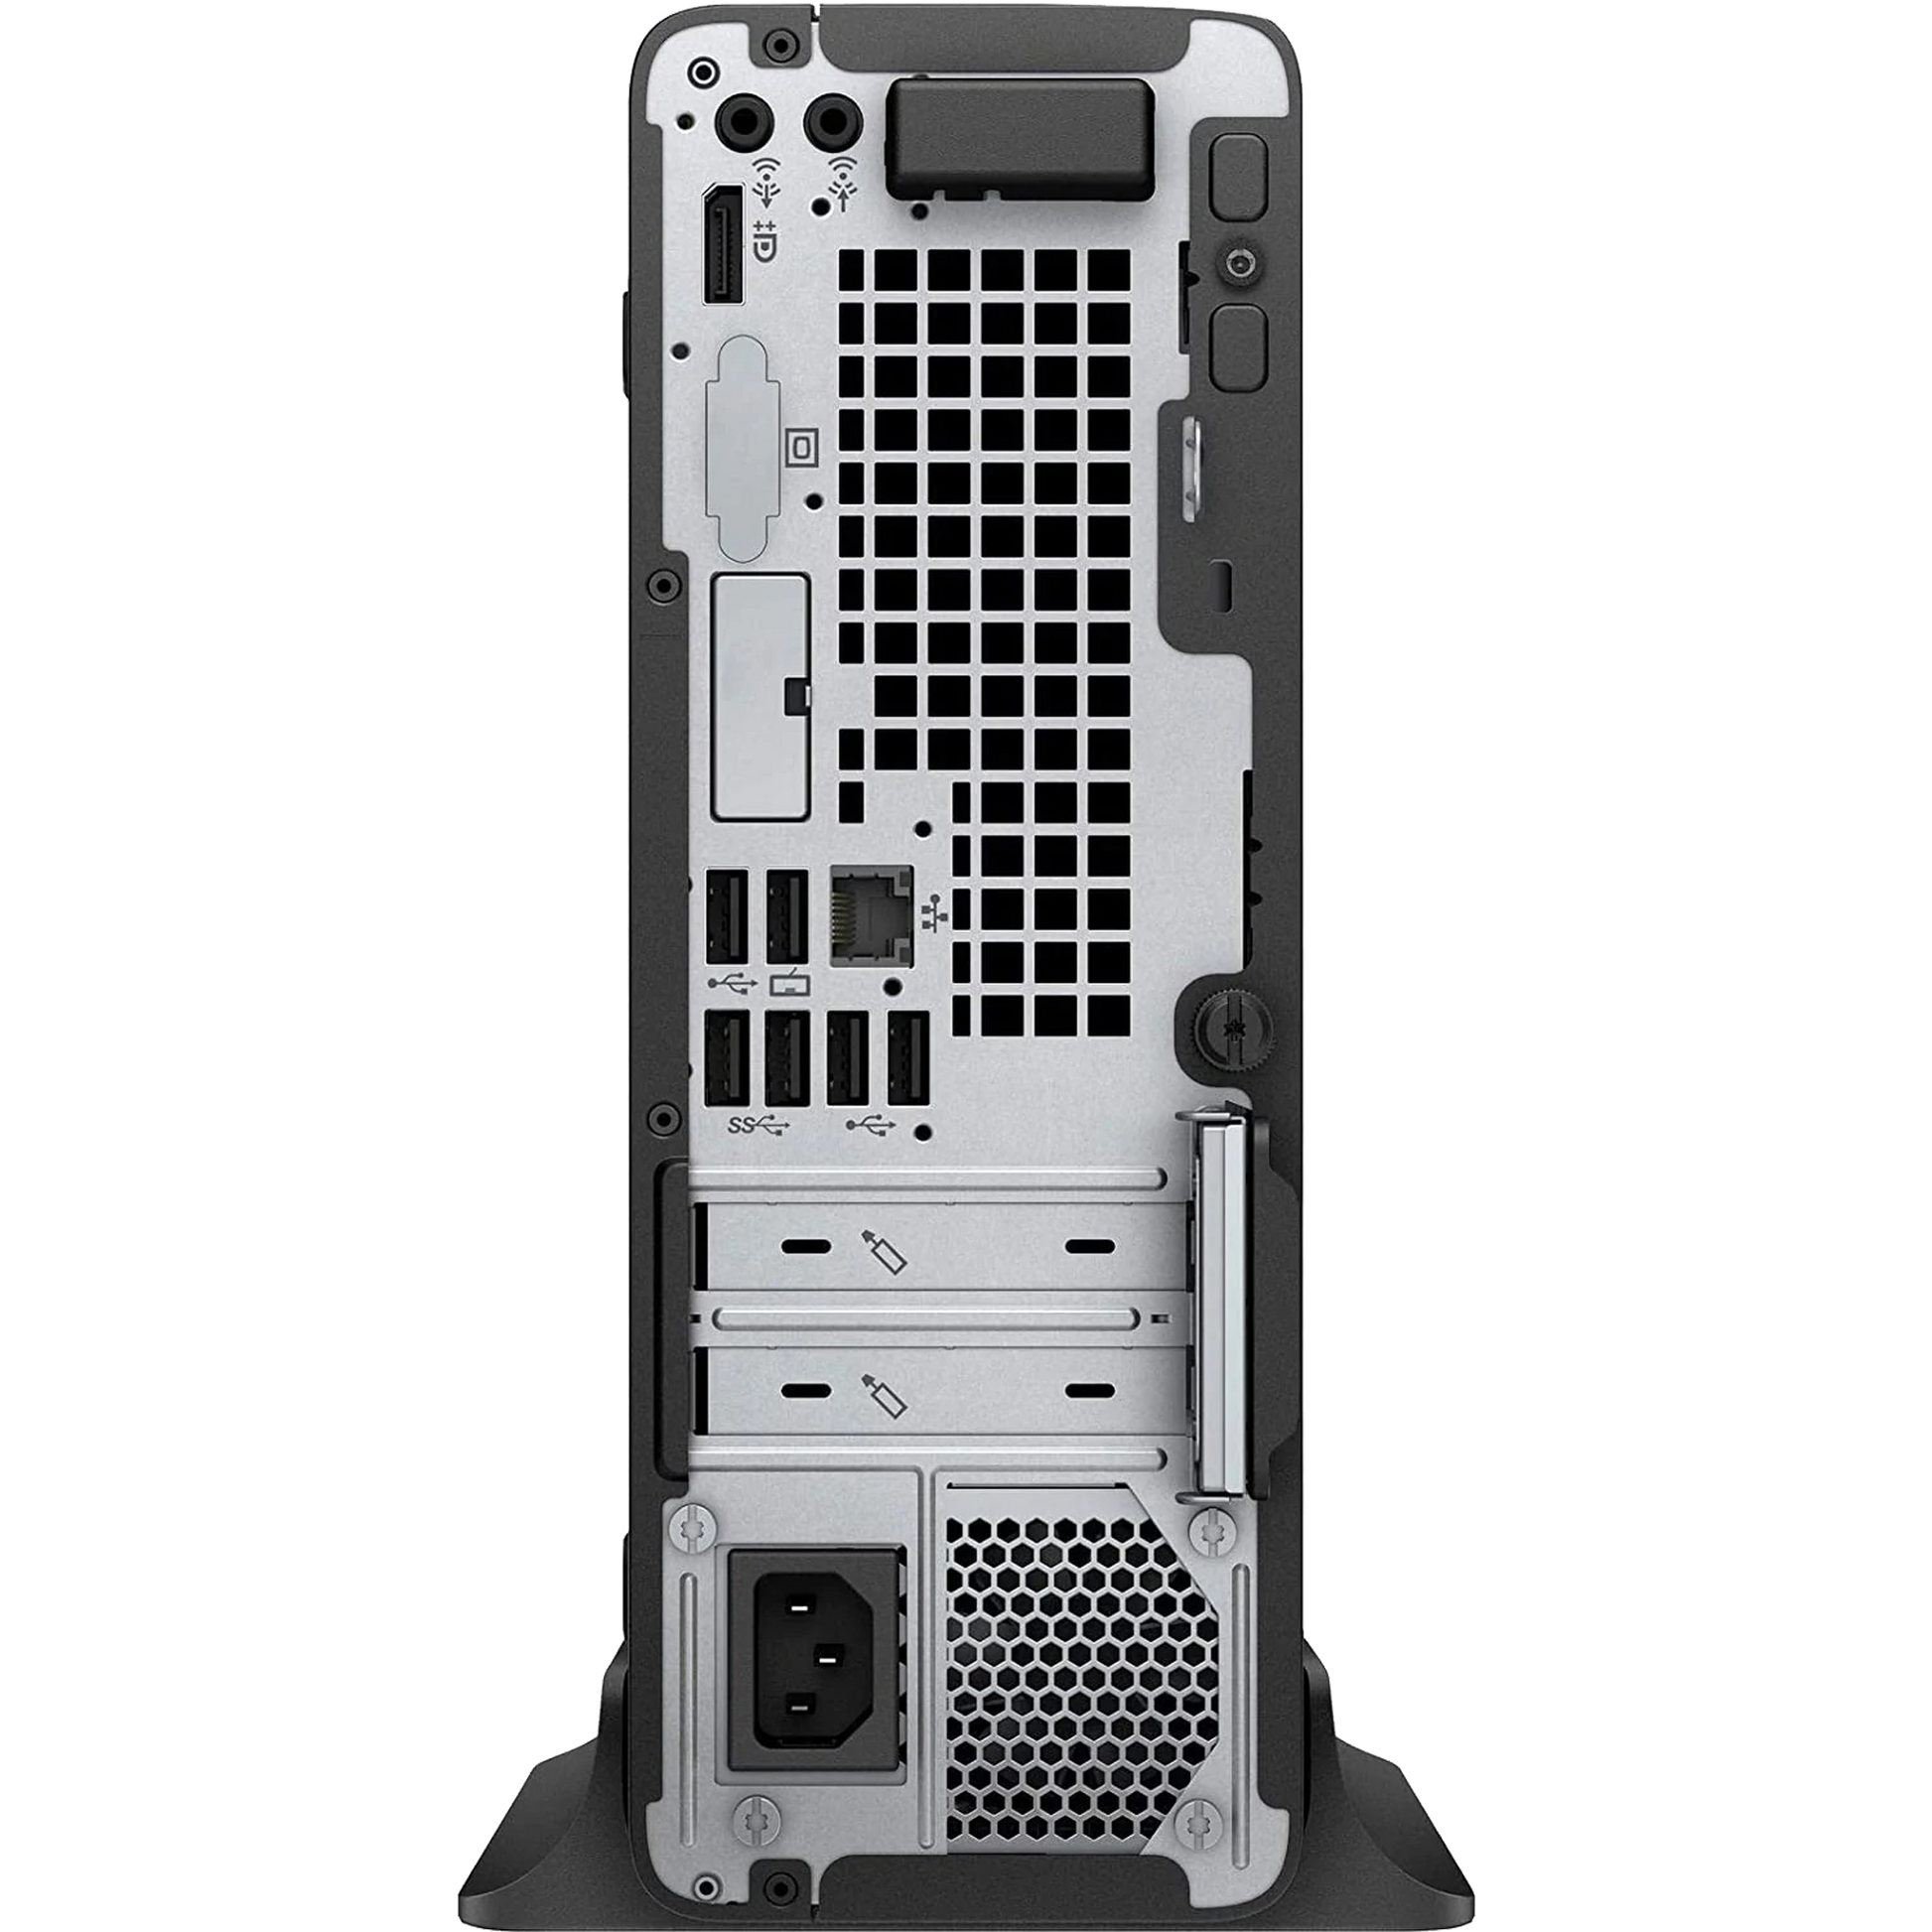 HP ProDesk 600 G5 - Intel i5, 9th Gen SFF Desktop PC with 16GB Ram + 23" Monitor Desktop Computers